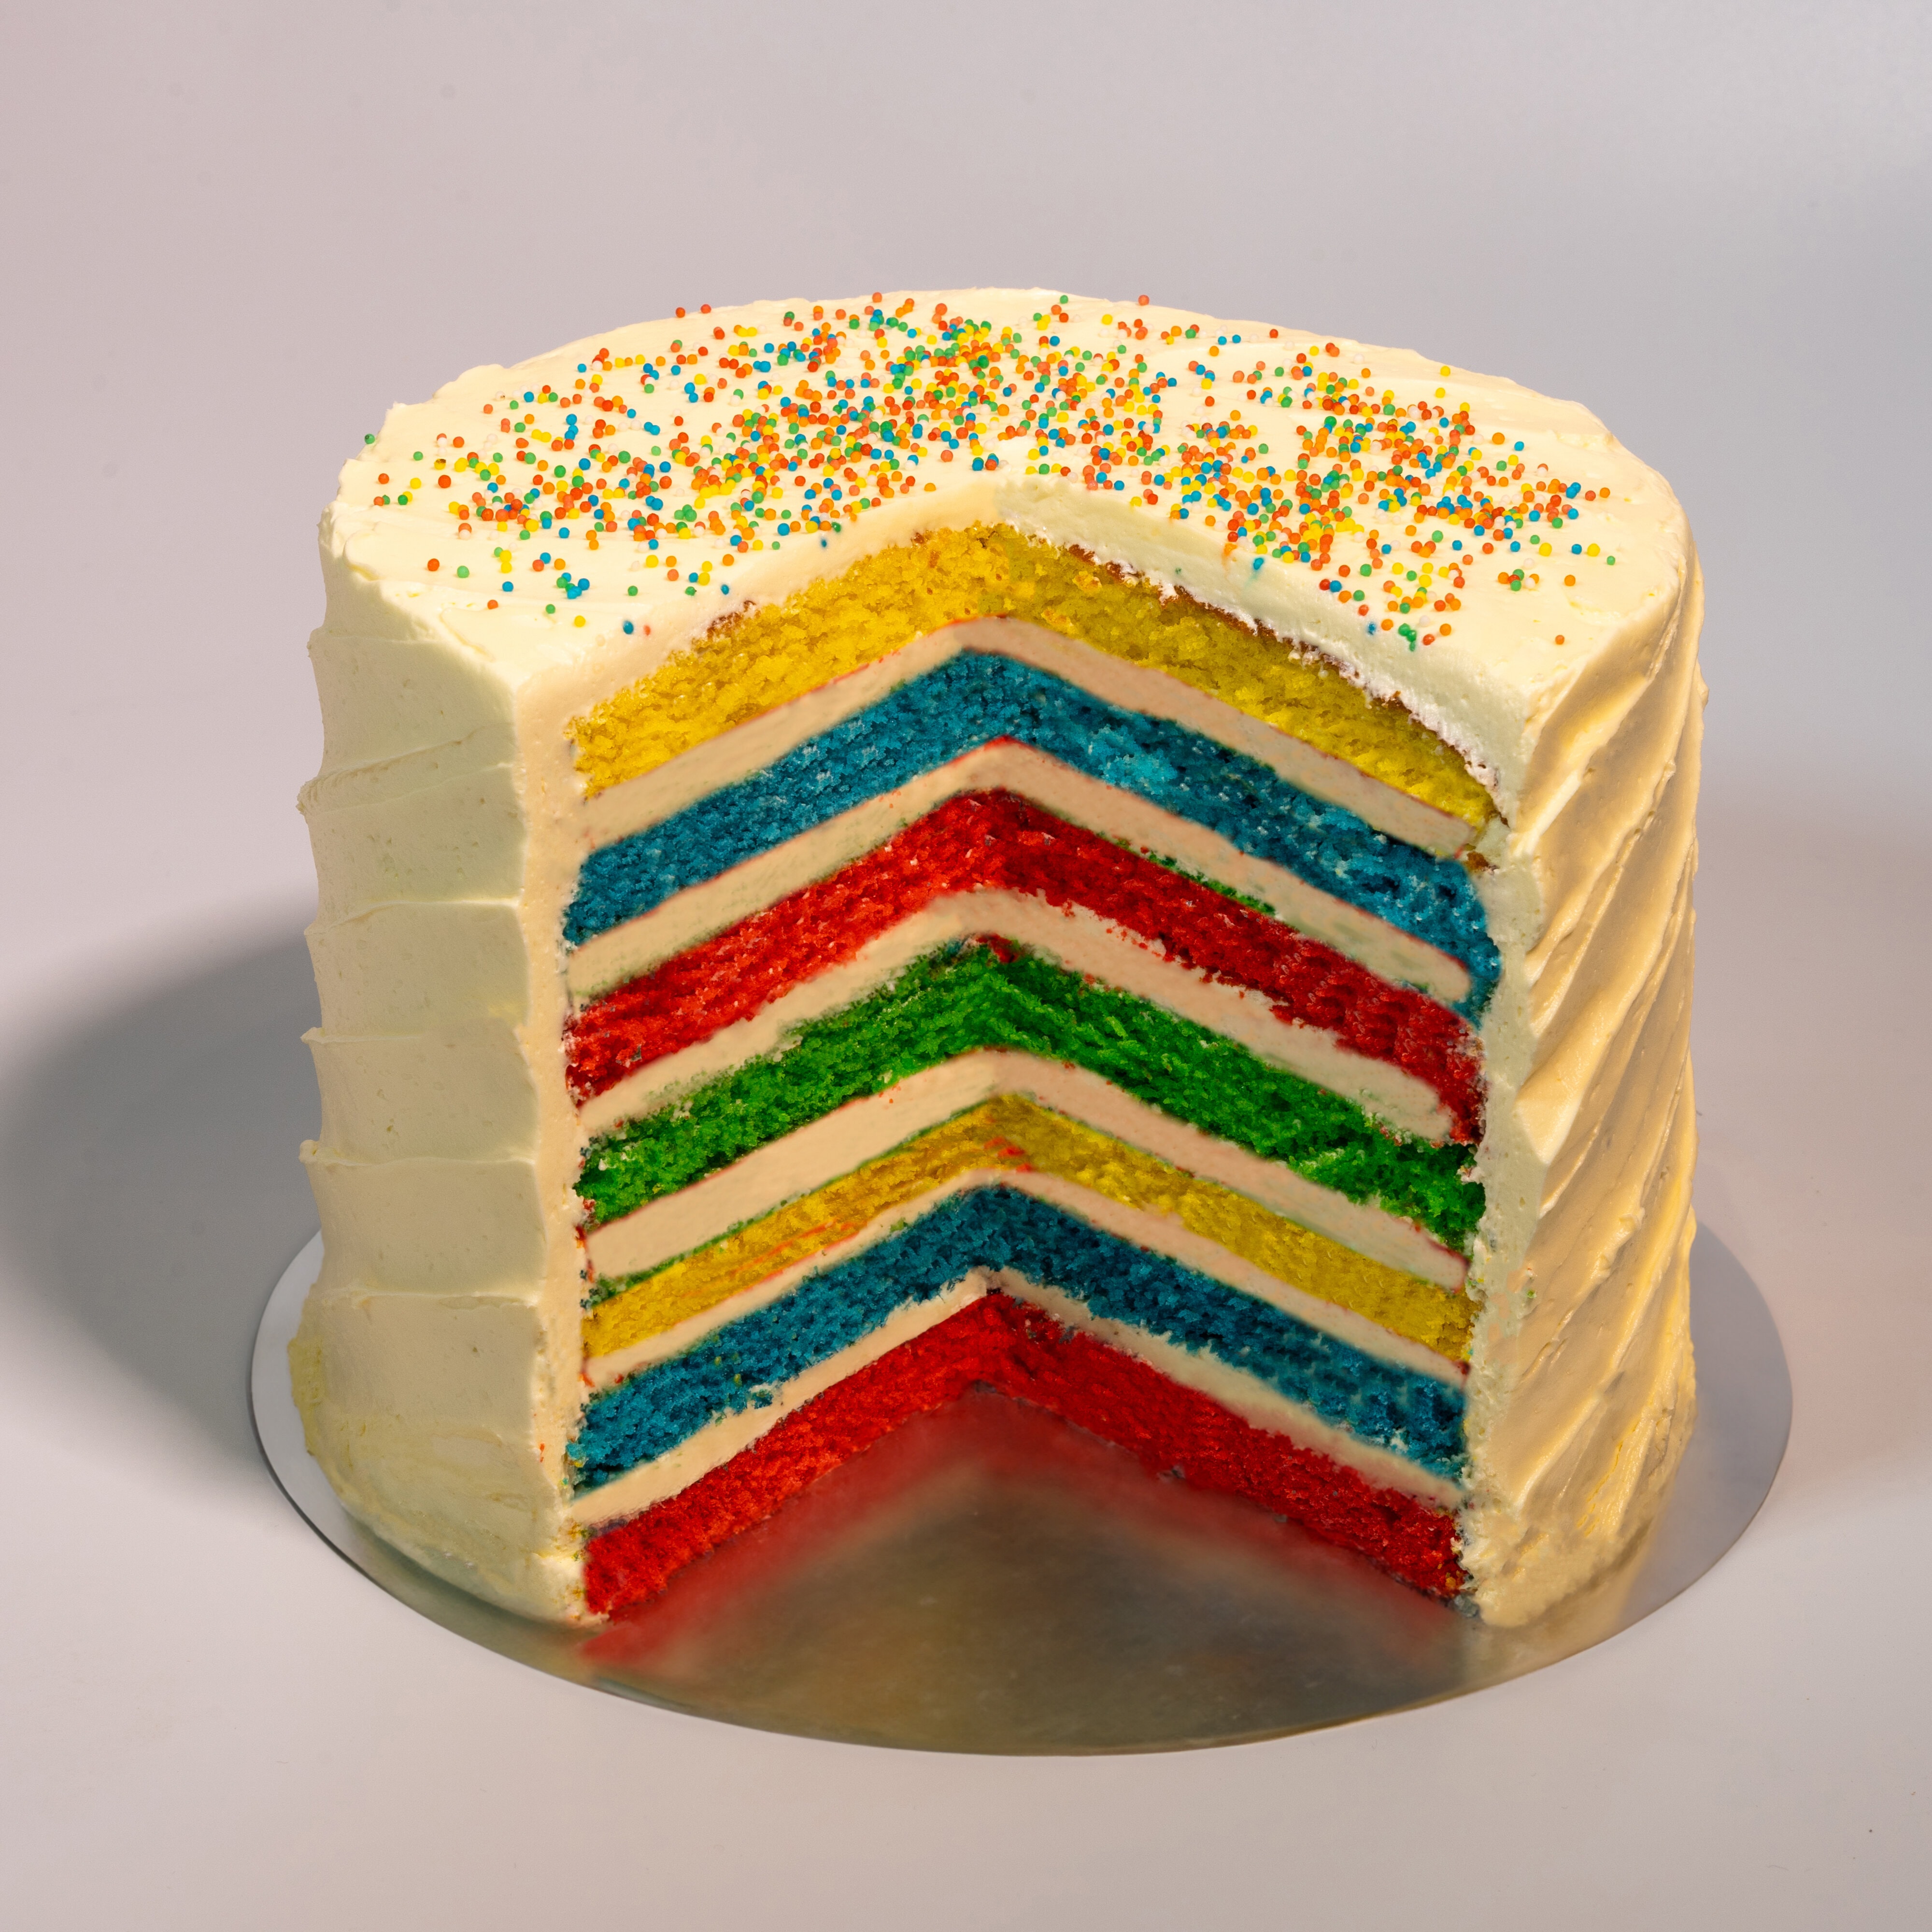 Rainbow cake - Picture of Hummingbird Bakery, Dubai - Tripadvisor